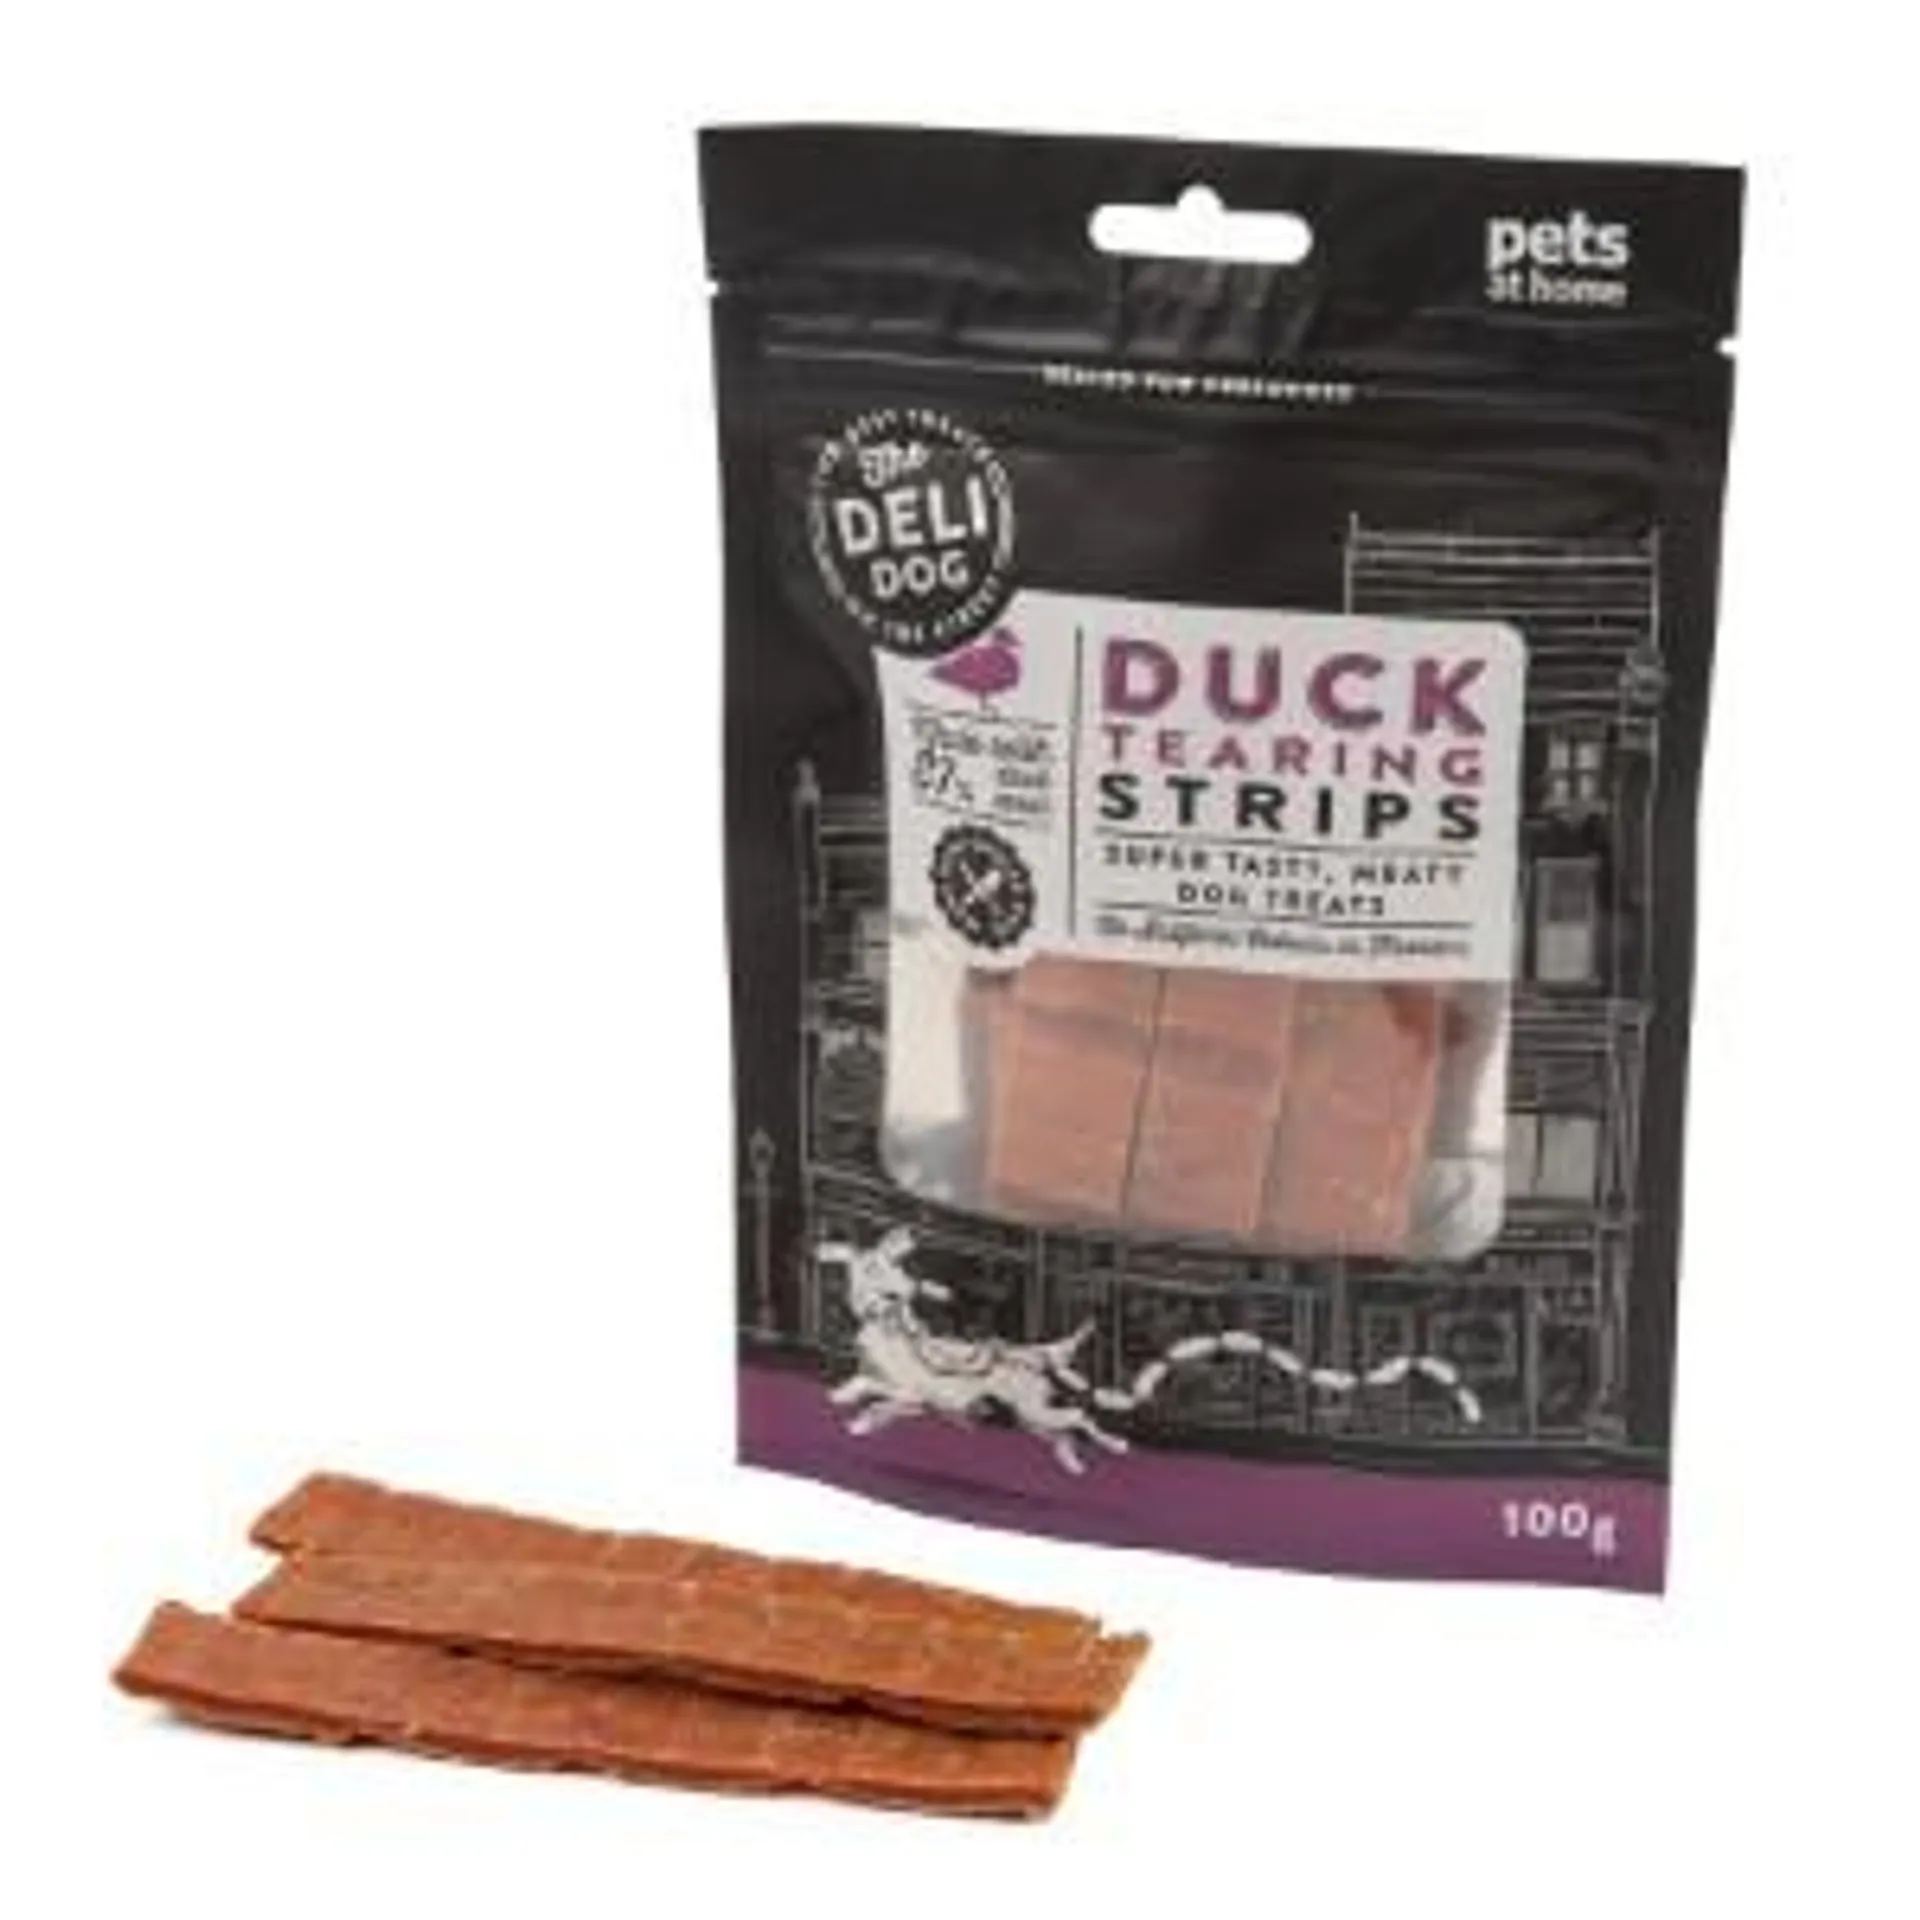 Deli Duck Strips Dog Treat 100g